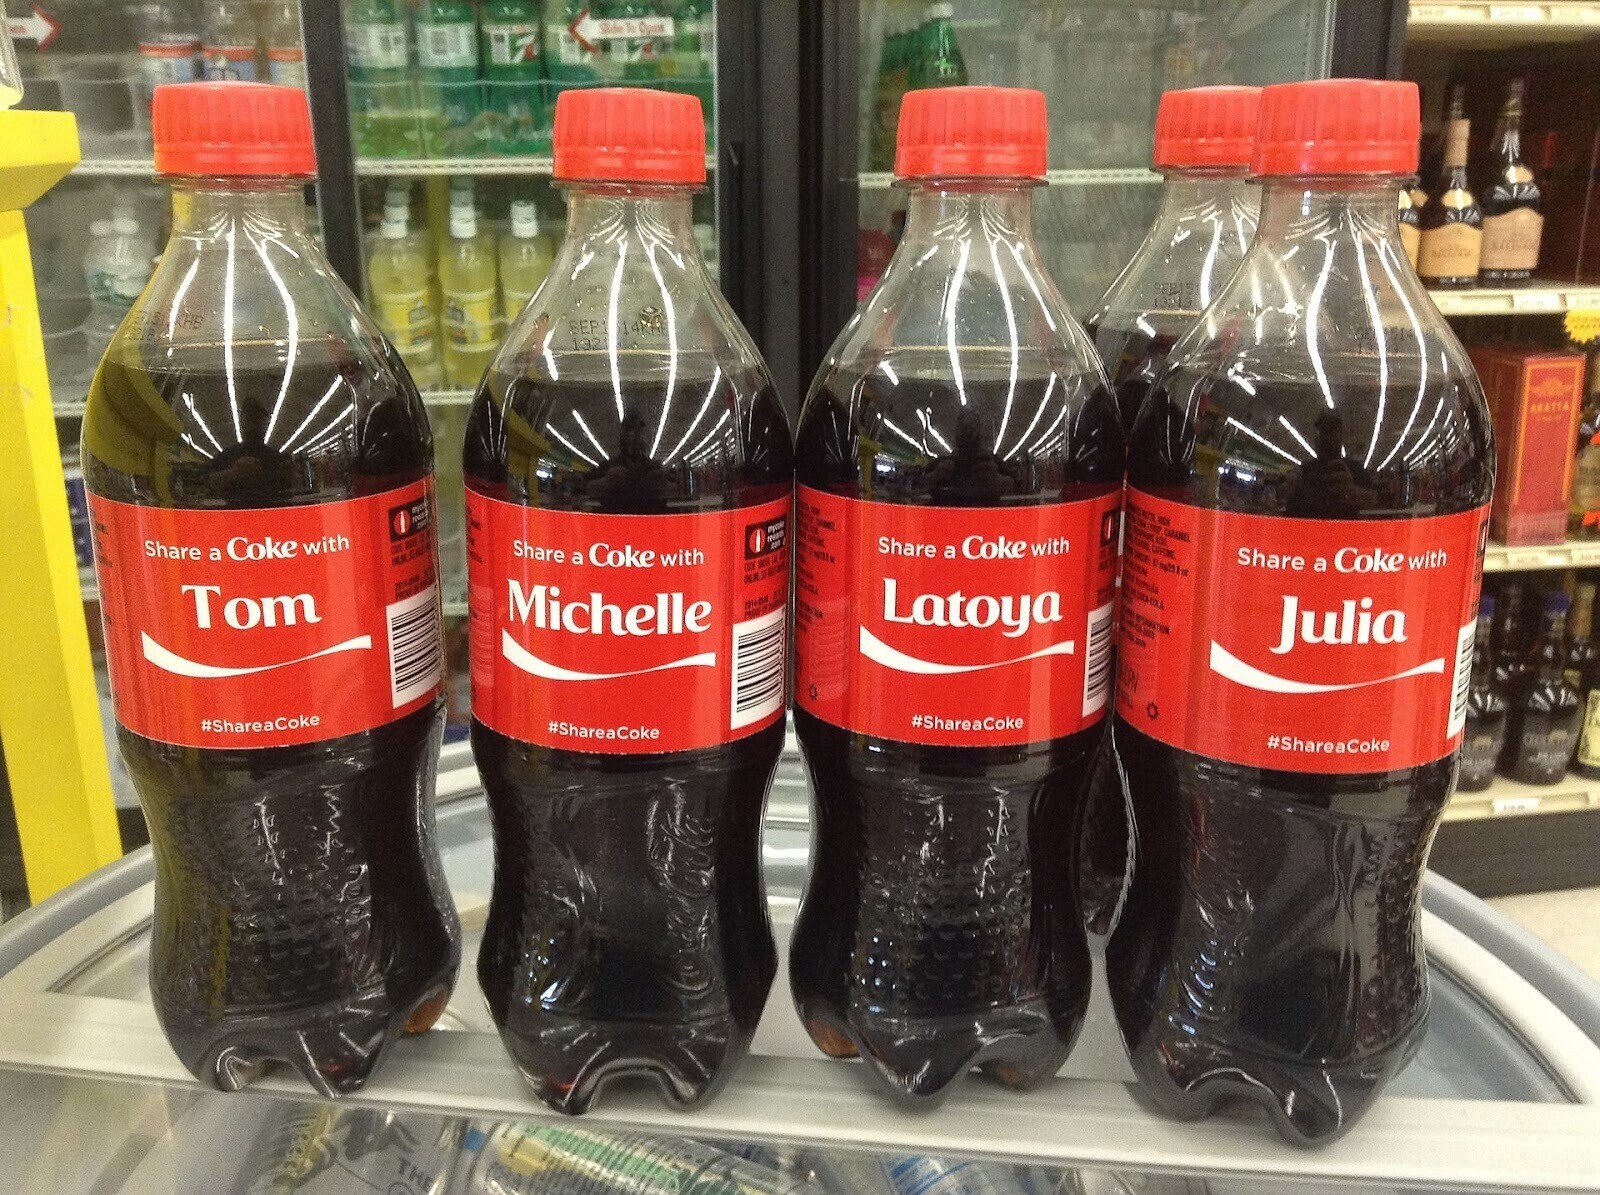 Coca-Cola's bottles on the shelf